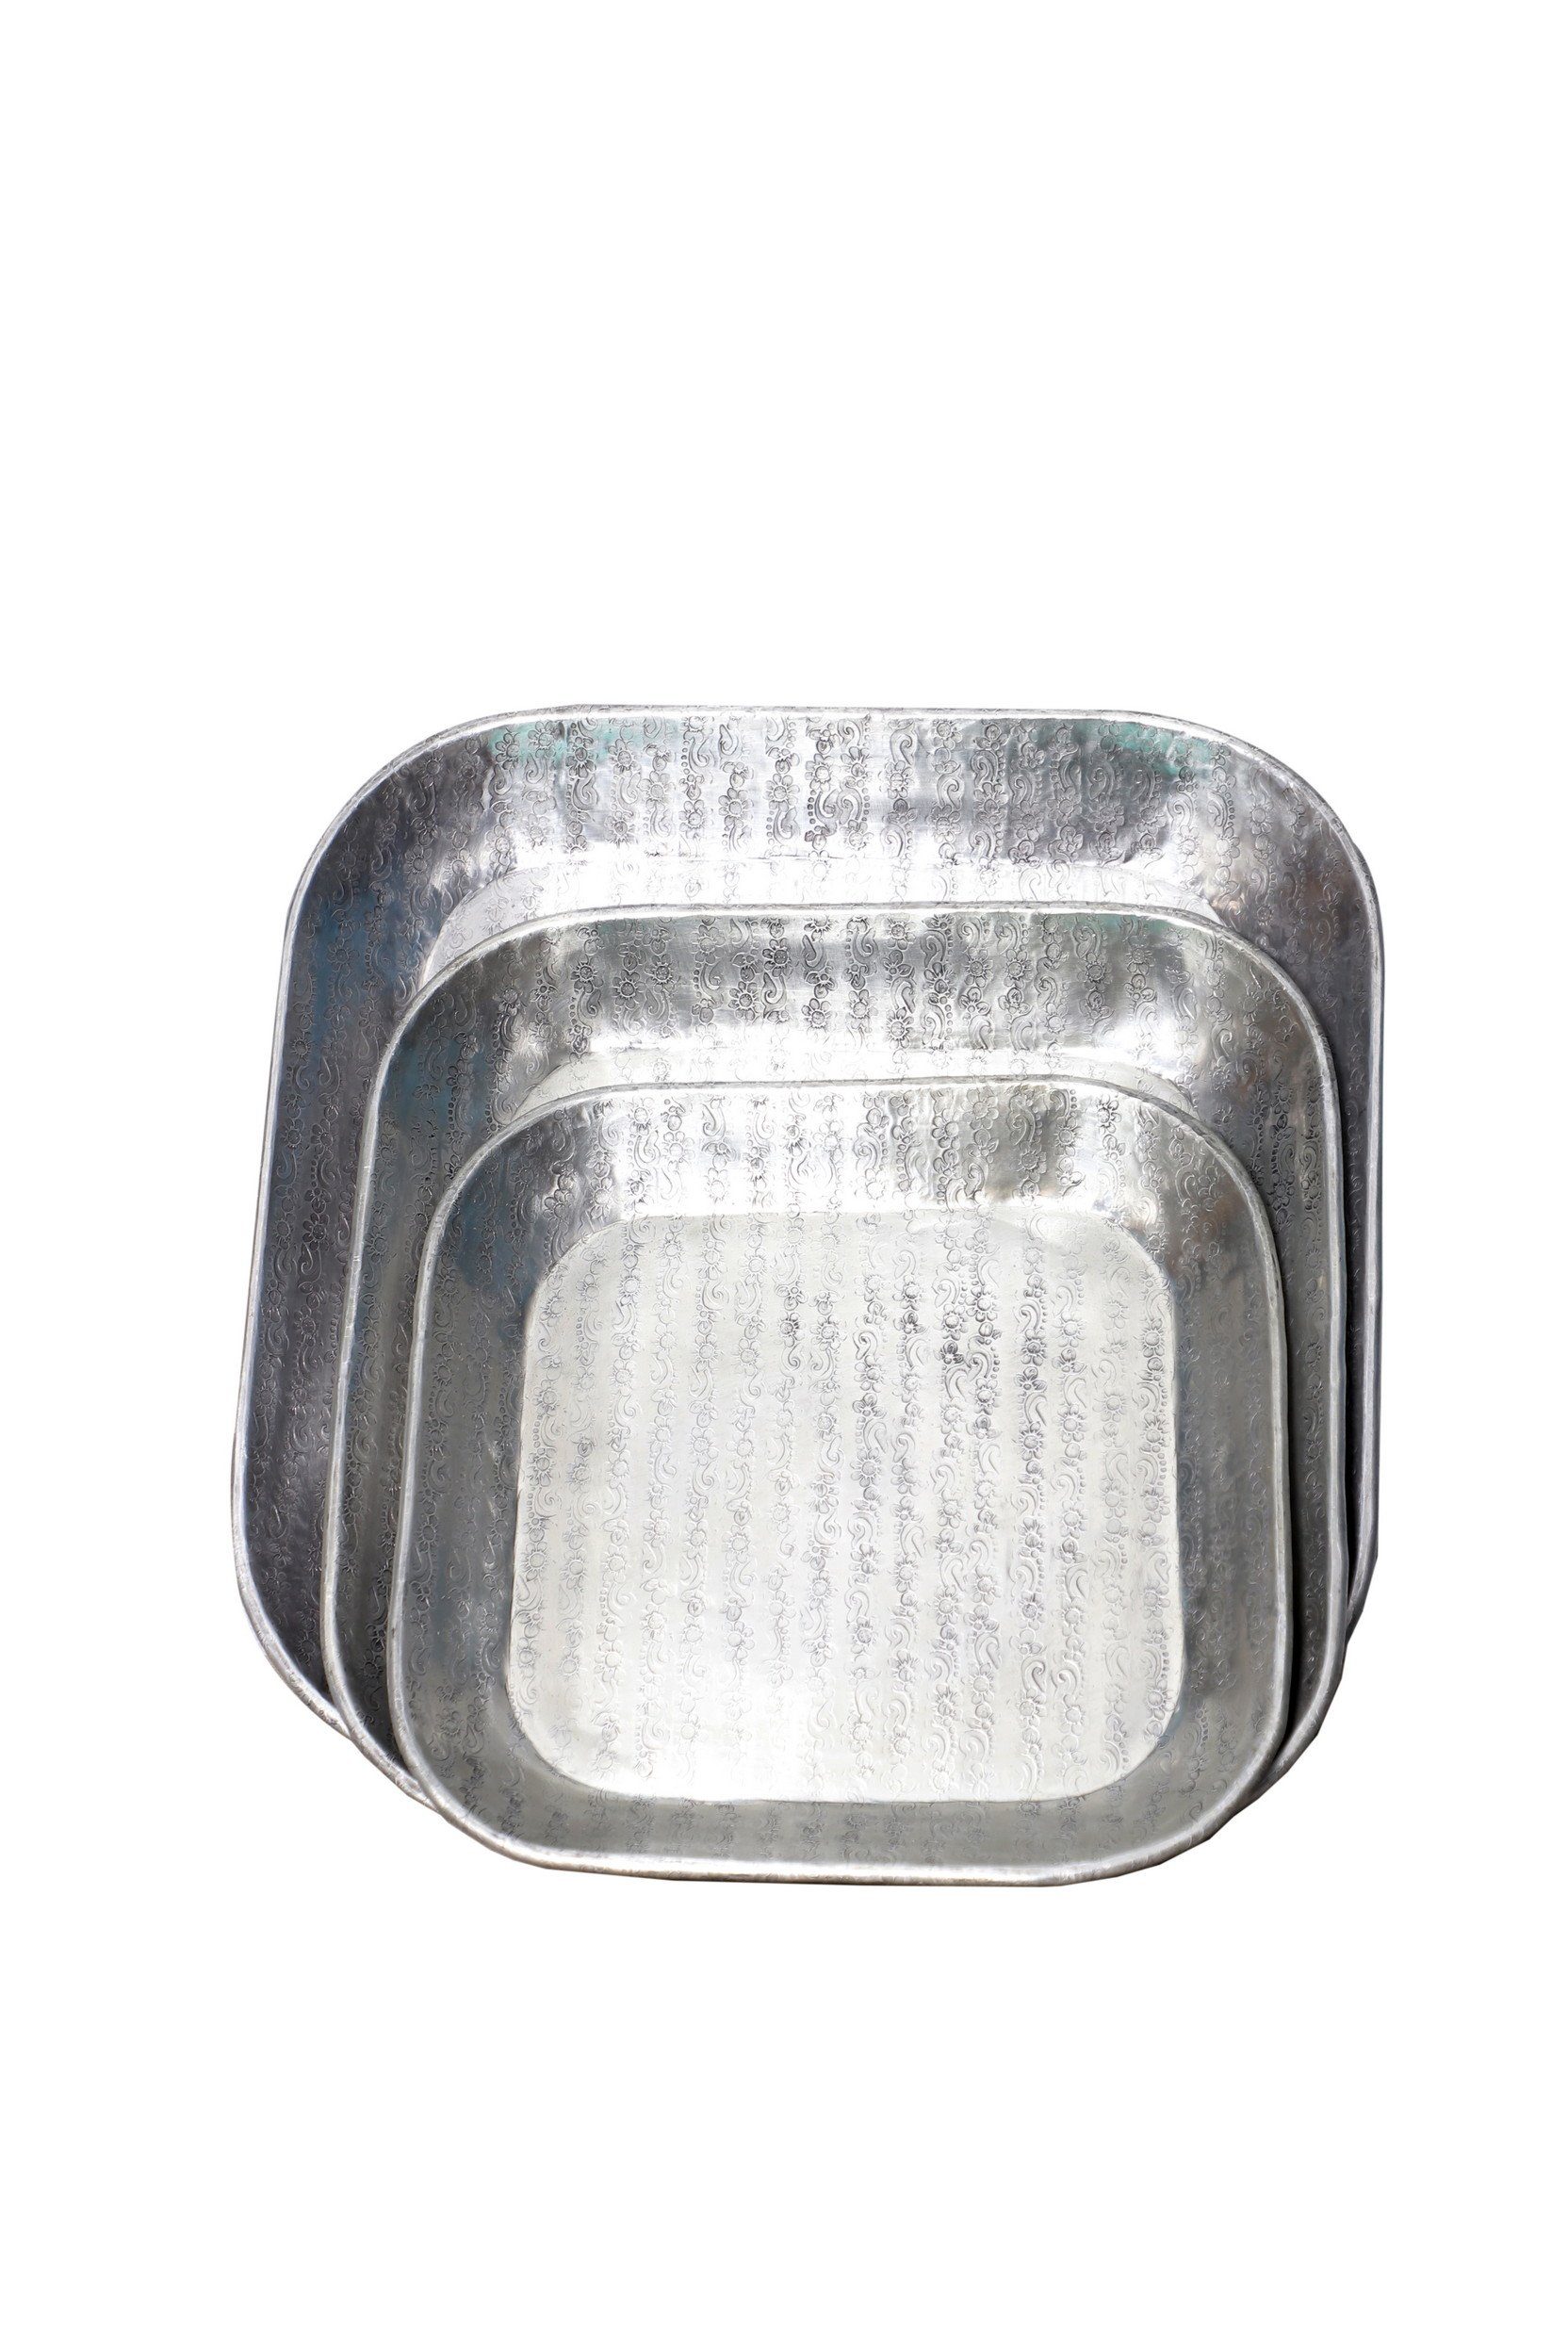 Casa Moro Tablett Orientalisches Aluminium, Tablett Optik, Prisma Serviertablett Hammerschlag Deko Tablett (Set, 3-tlg), Aluminium aus Boho mit Silber Weihnachten